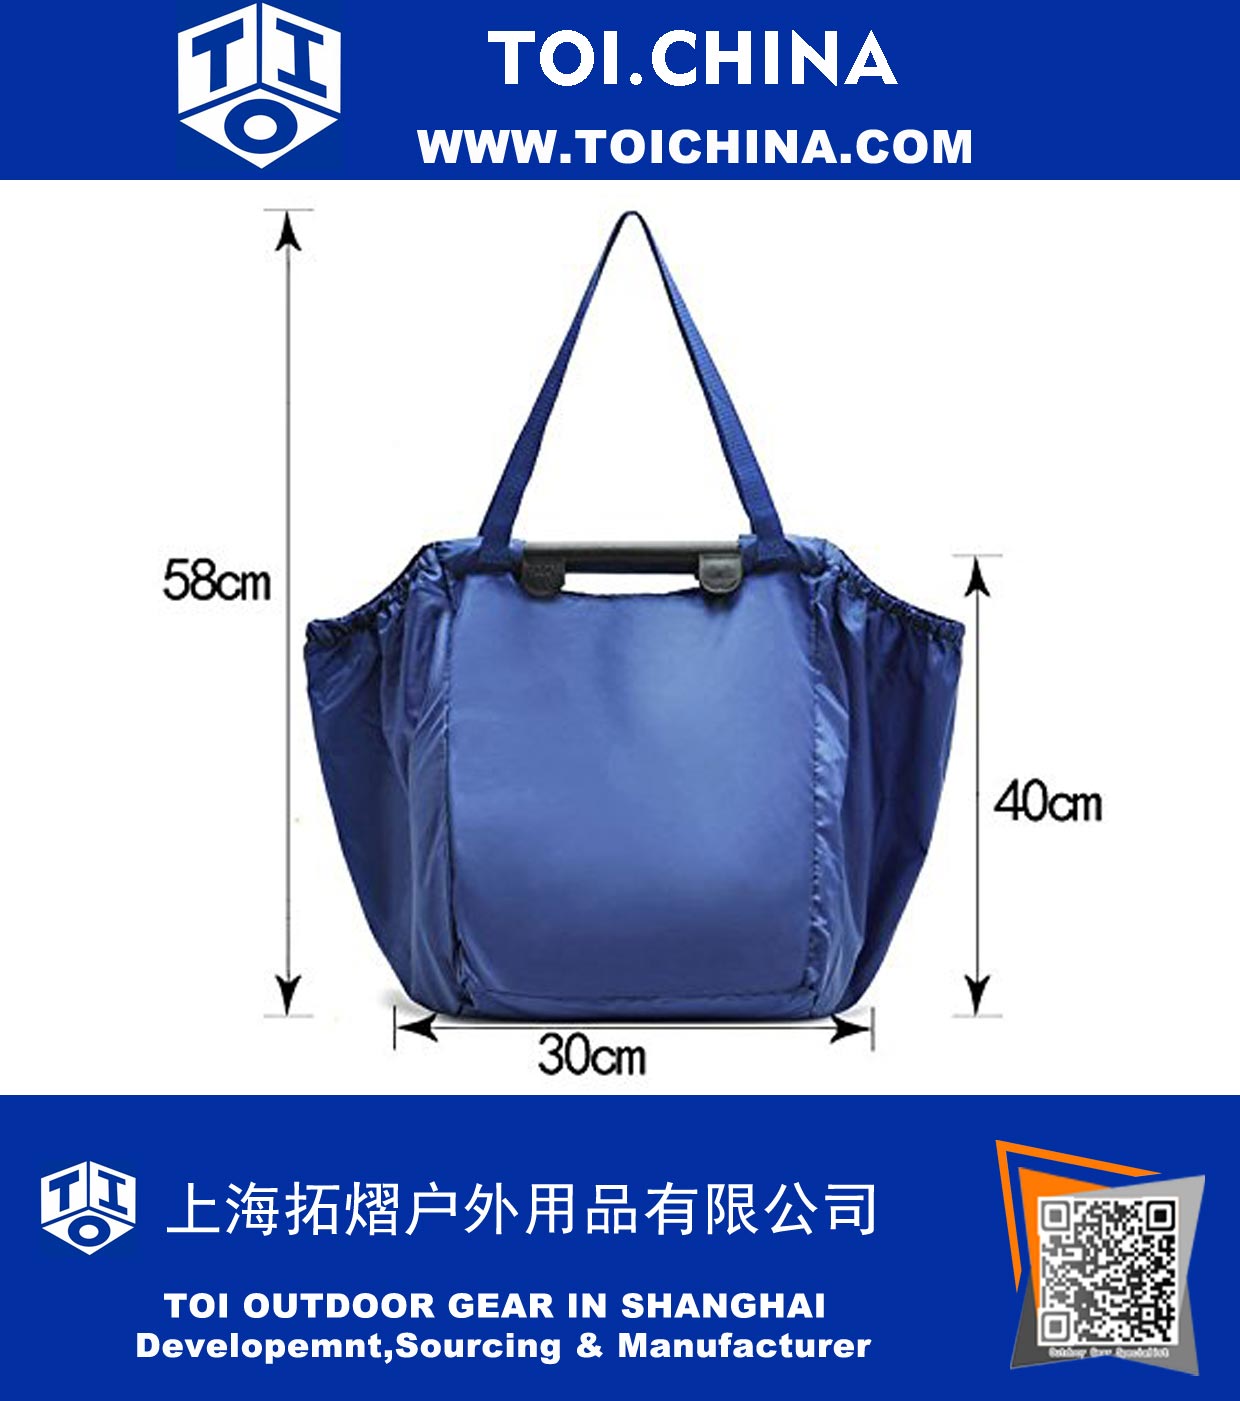 Reusable Shopping Cart Bags